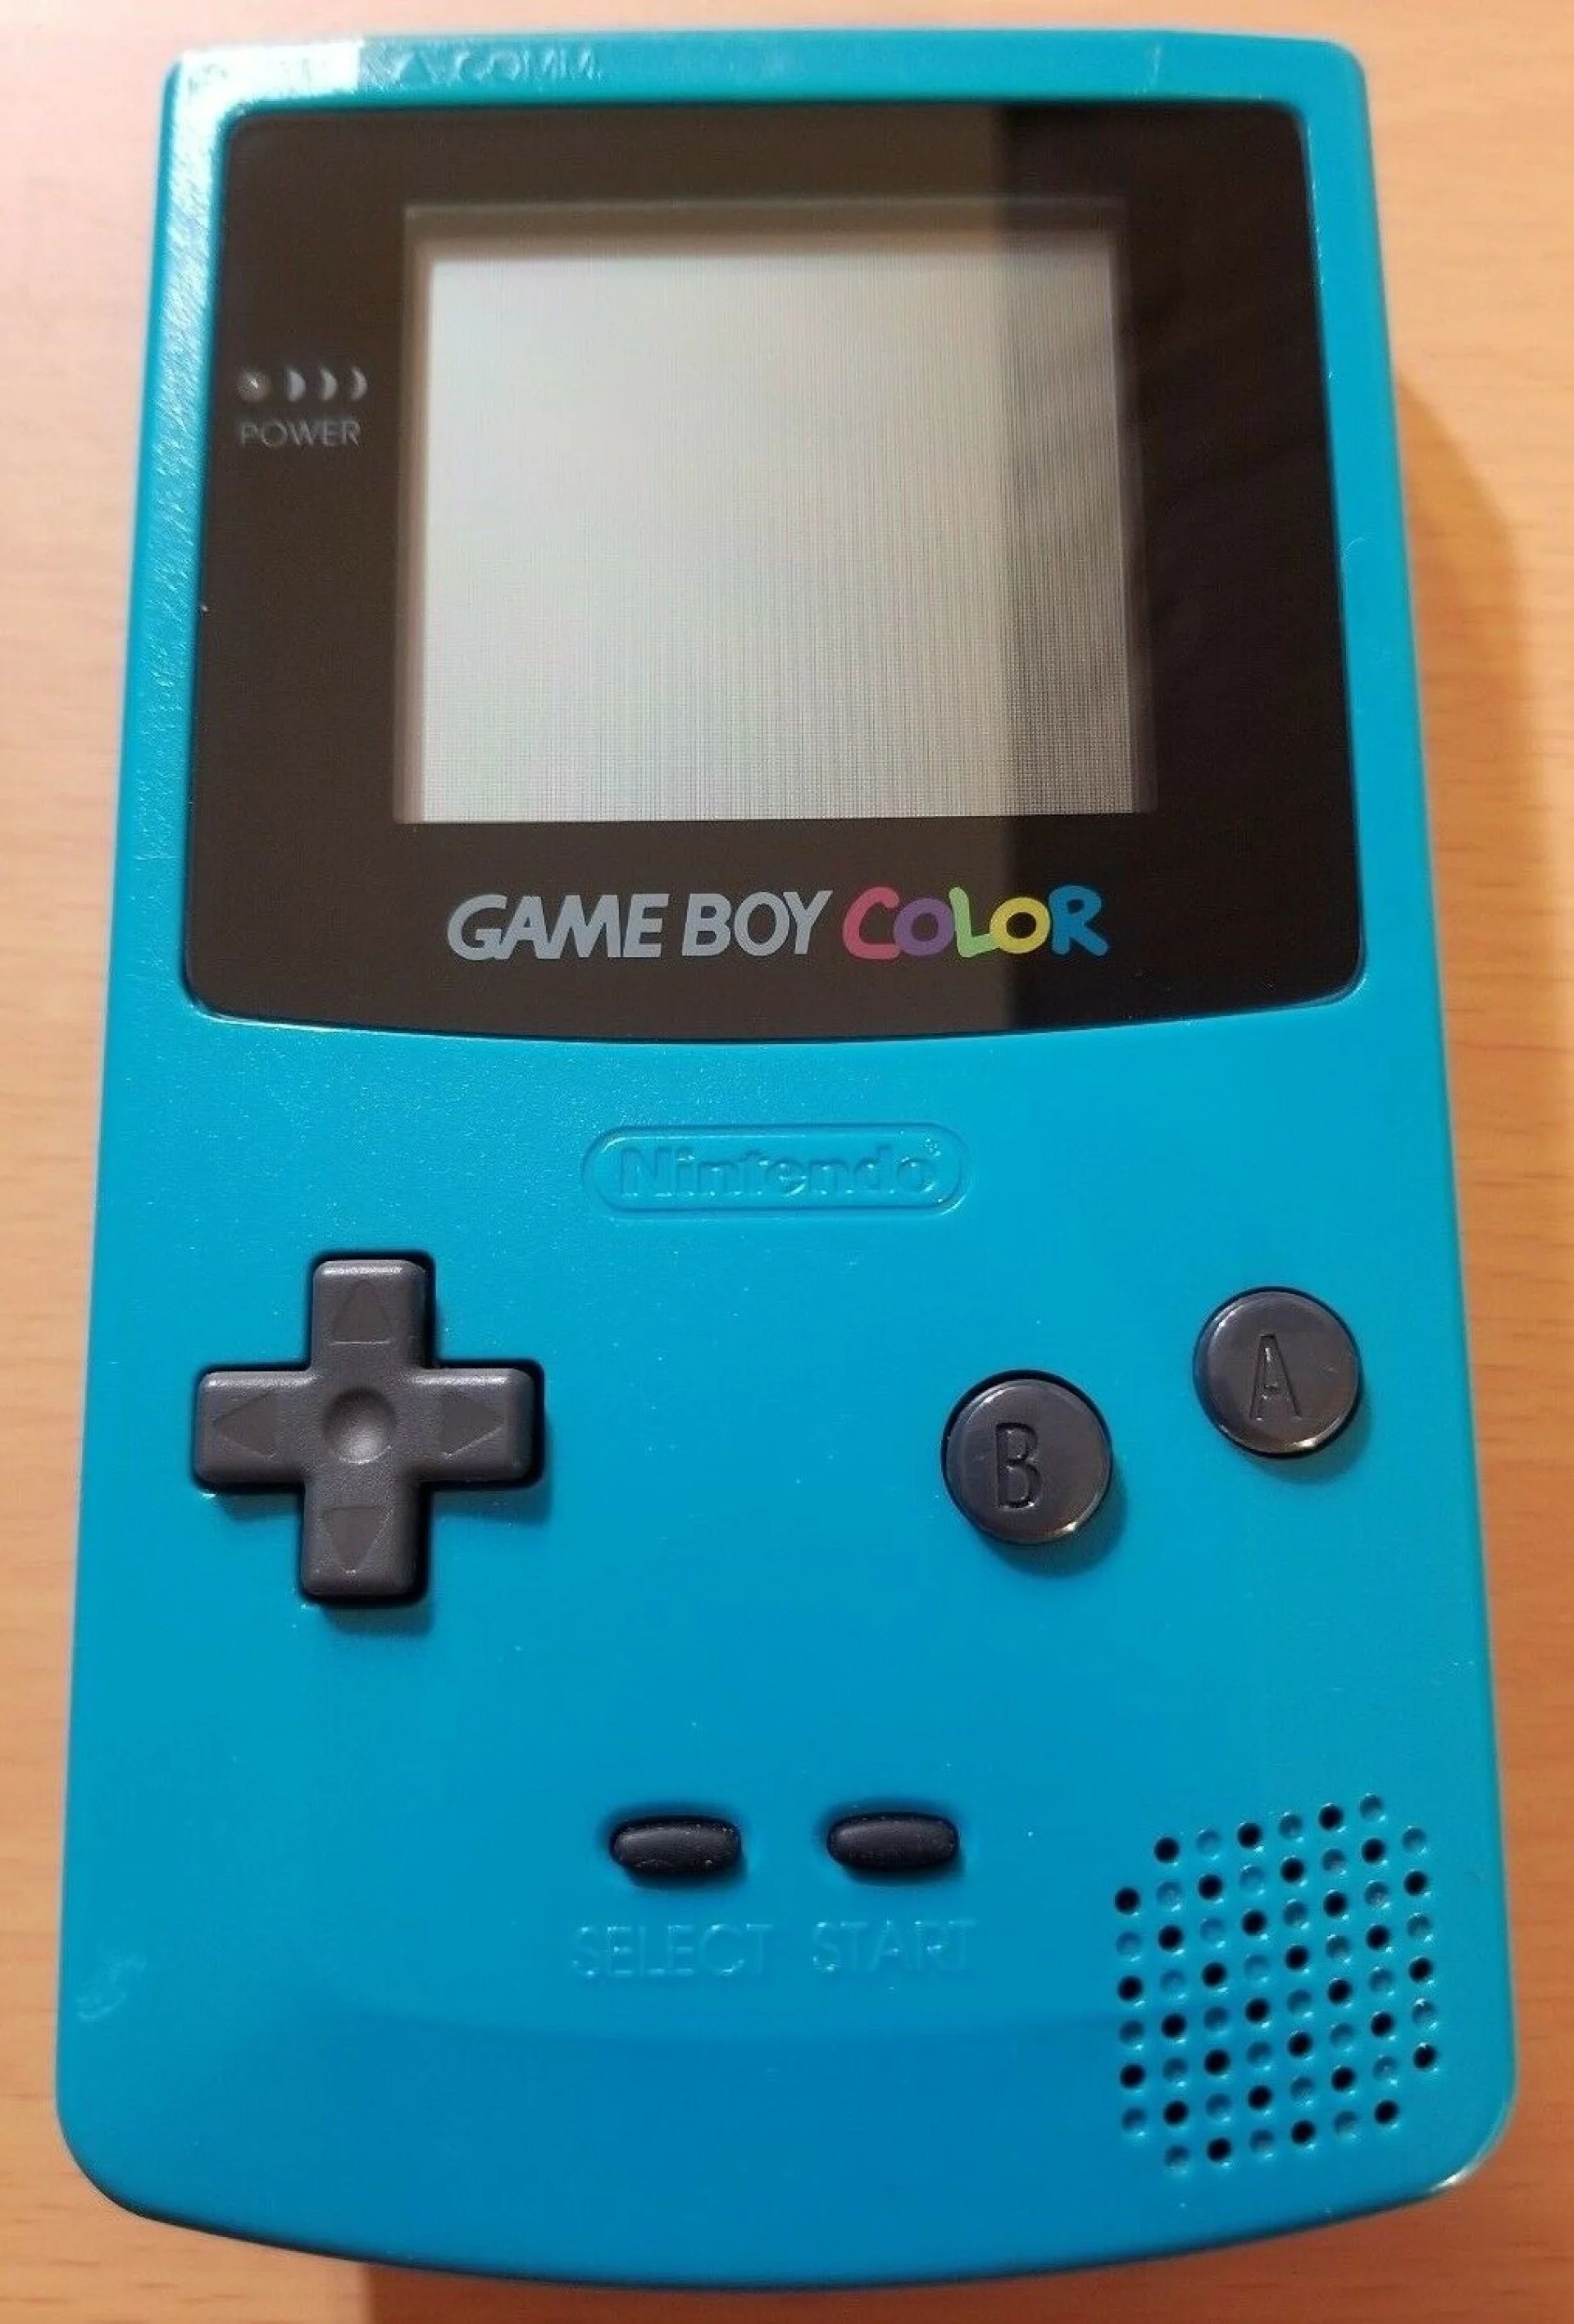 Game boy Color. Цвета Нинтендо. Nintendo Color TV game. Sexualize Nintendo. Nintendo color